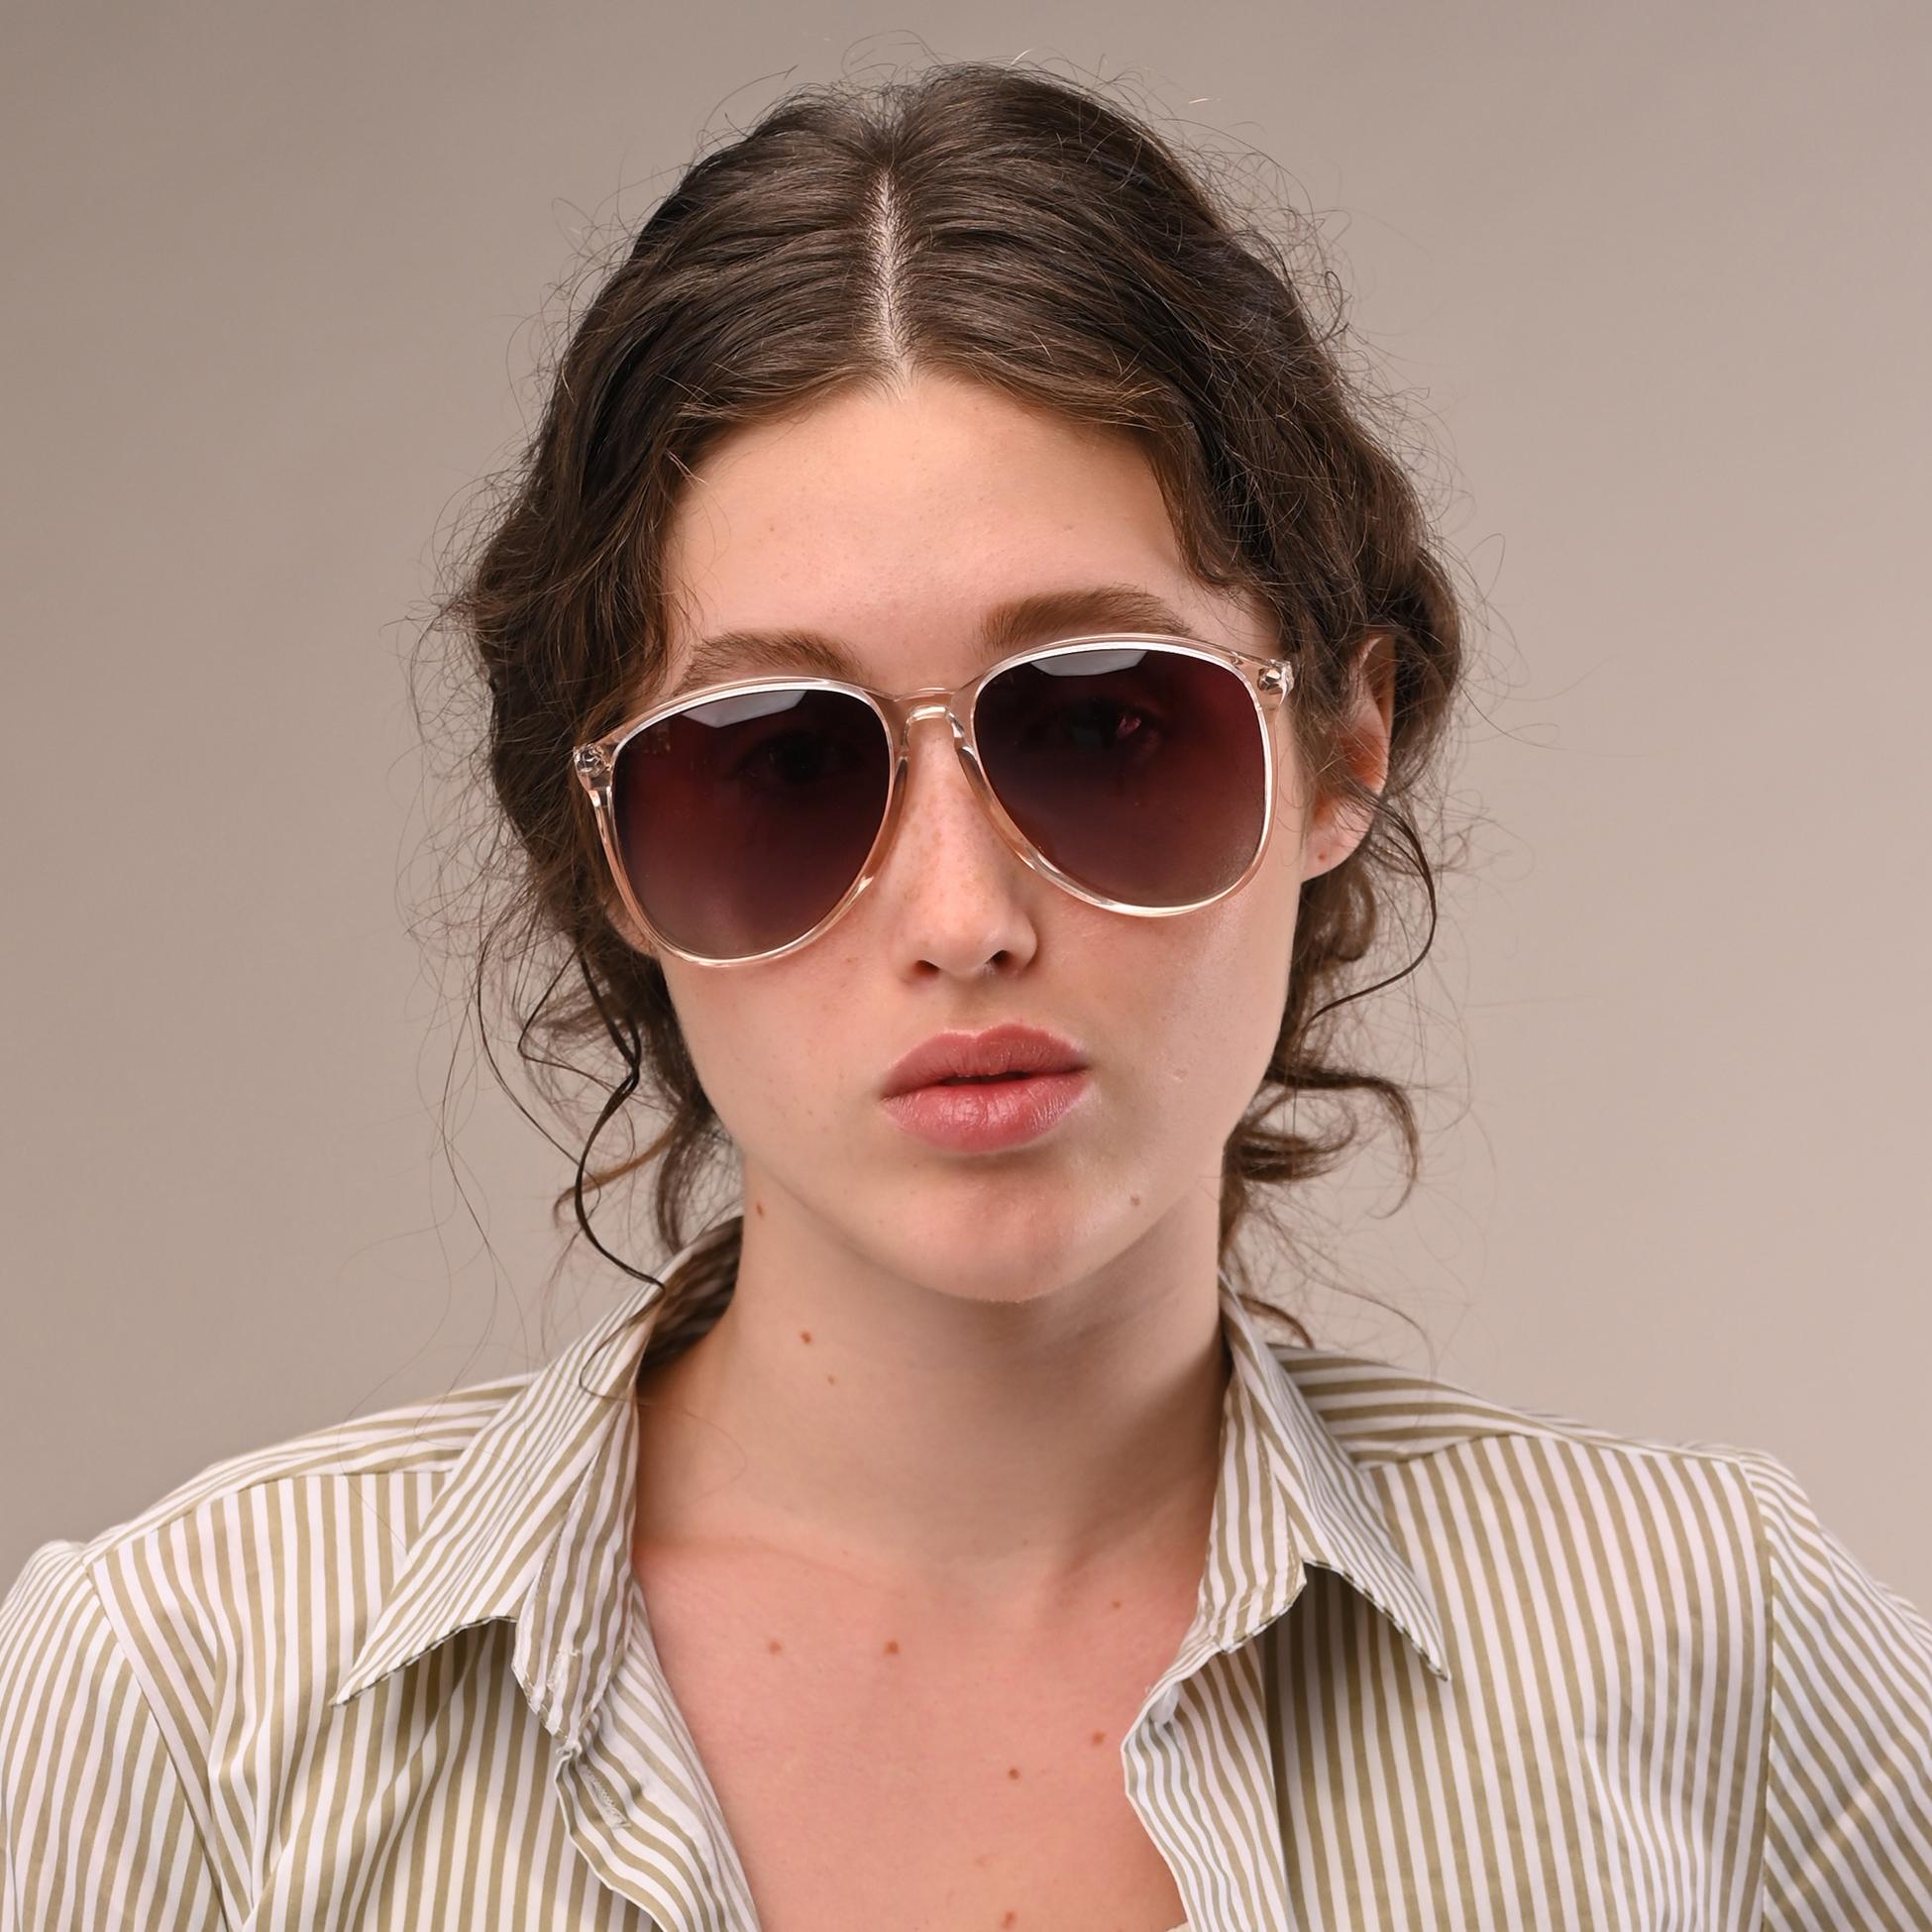 Argos vintage sunglasses, France 70s For Sale 3